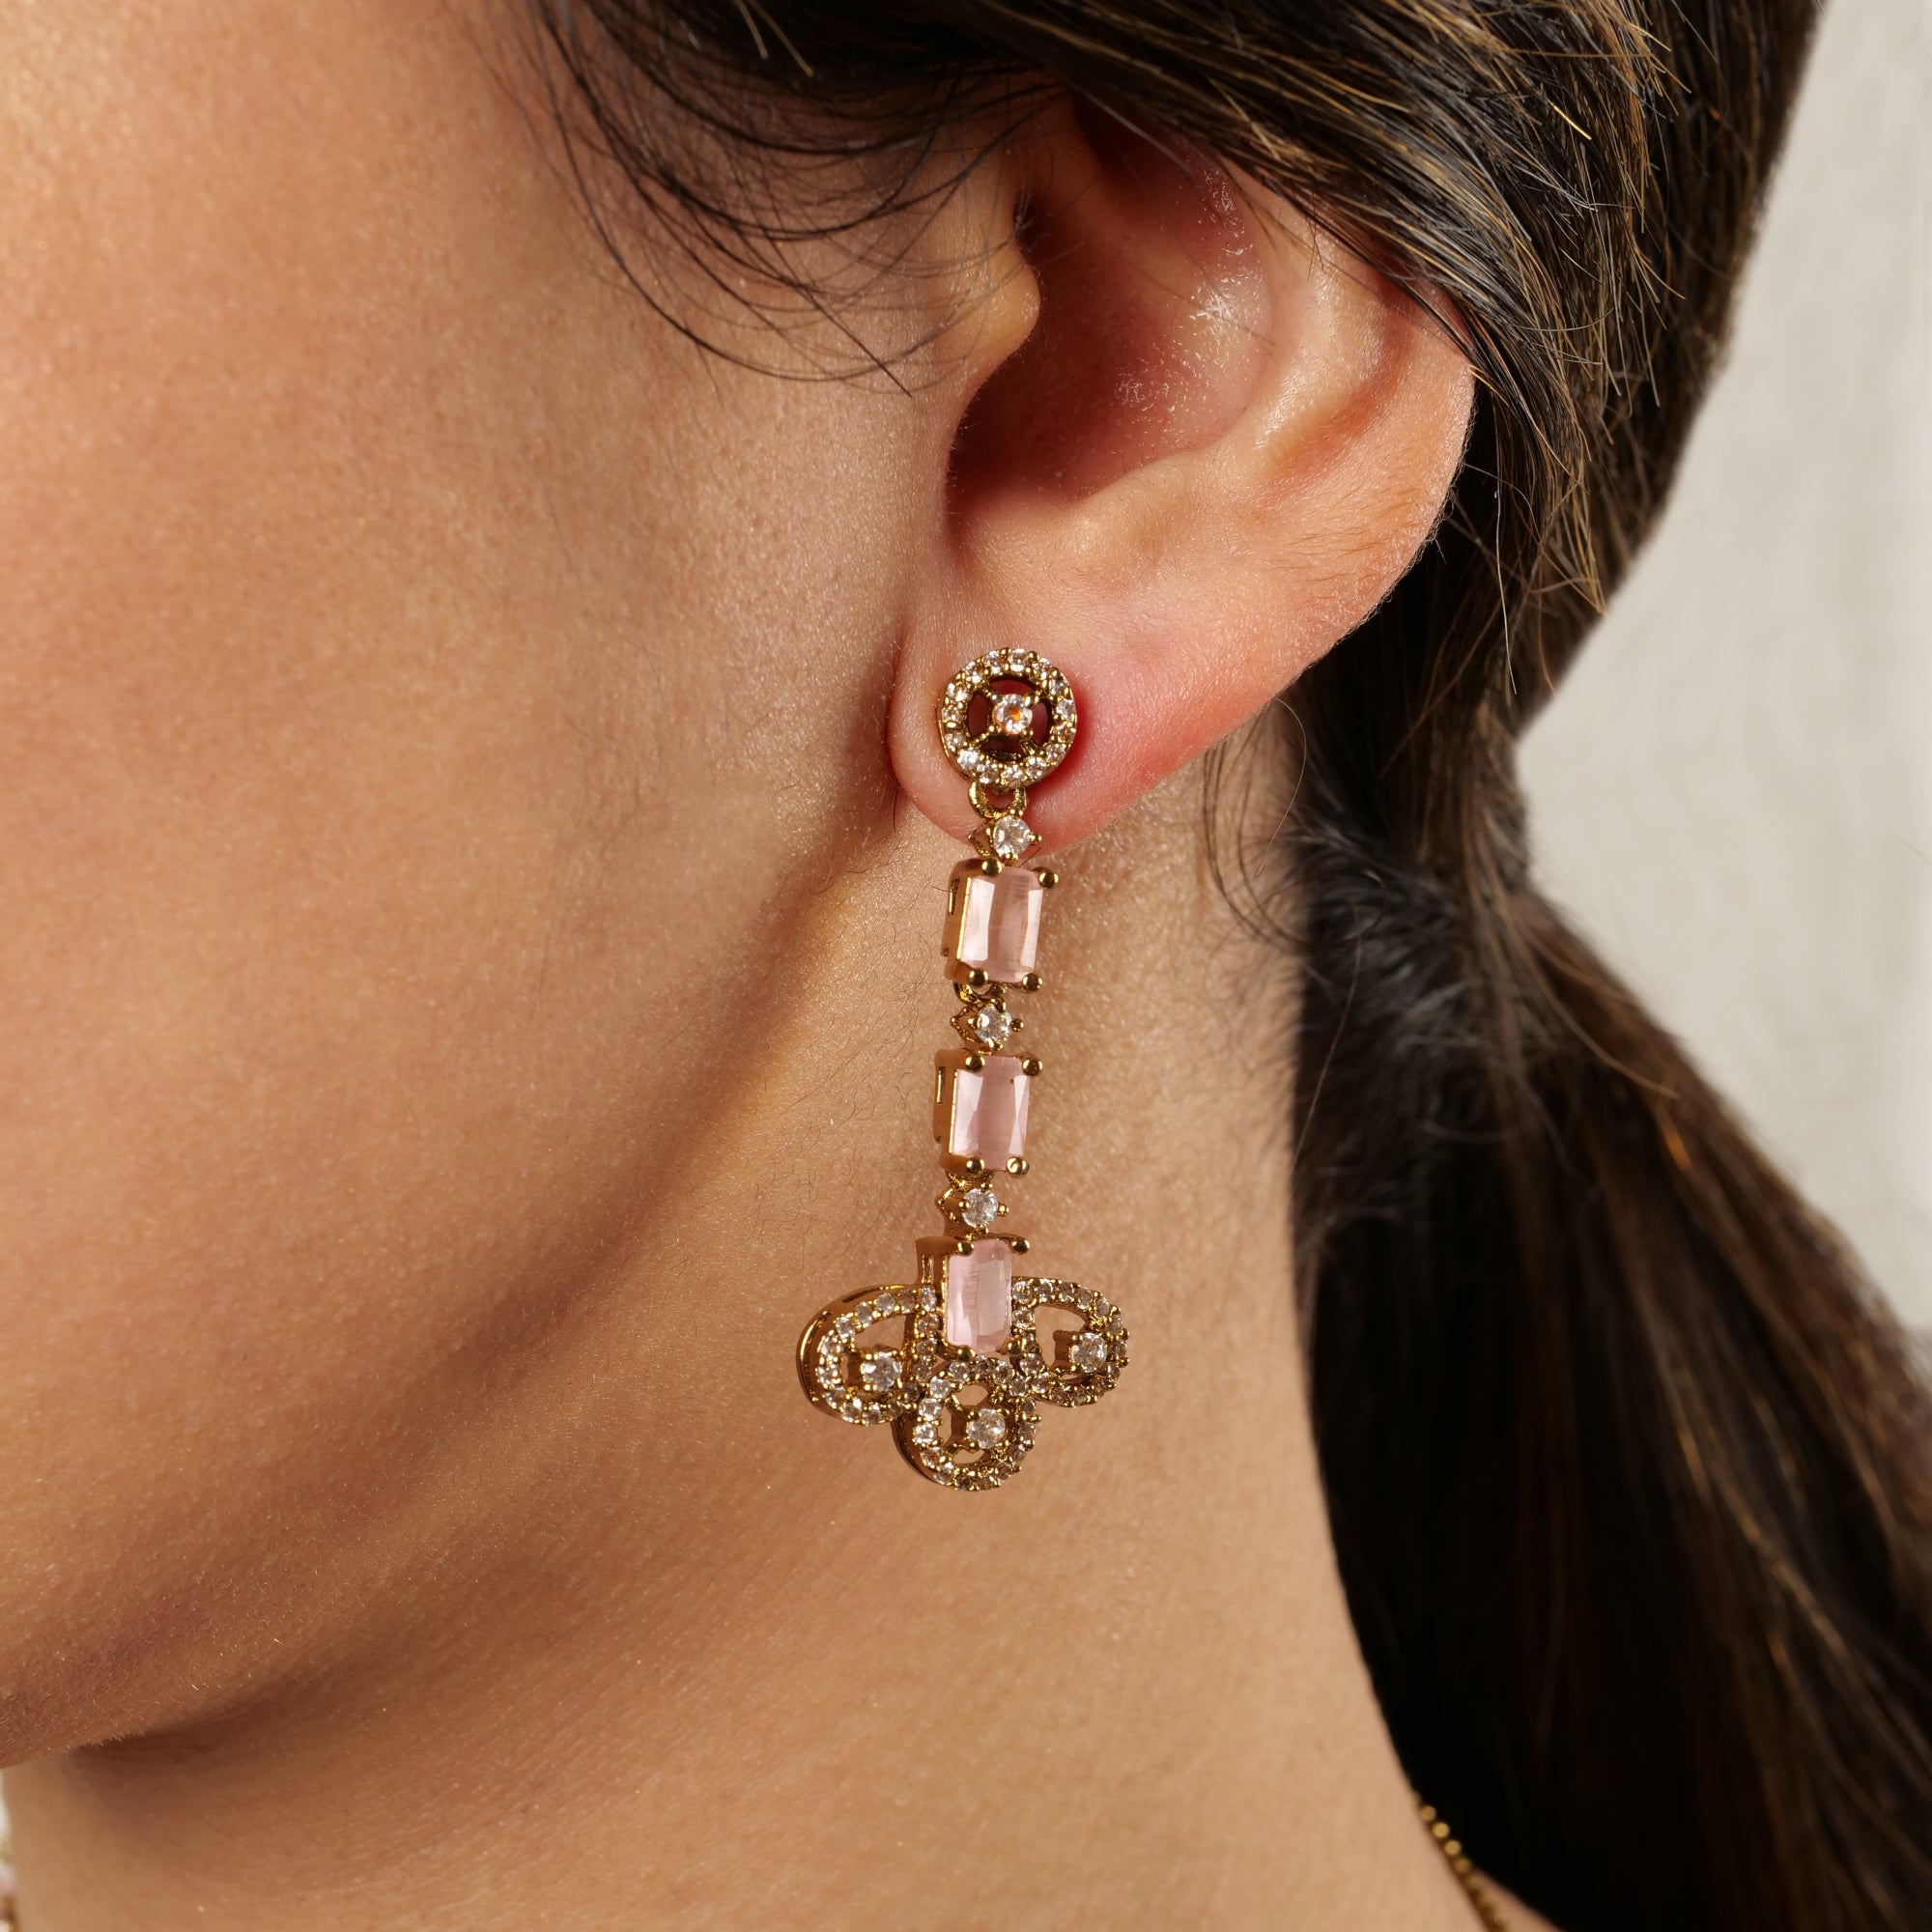 Light Pink Elegant Cubic Zirconia Necklace Set